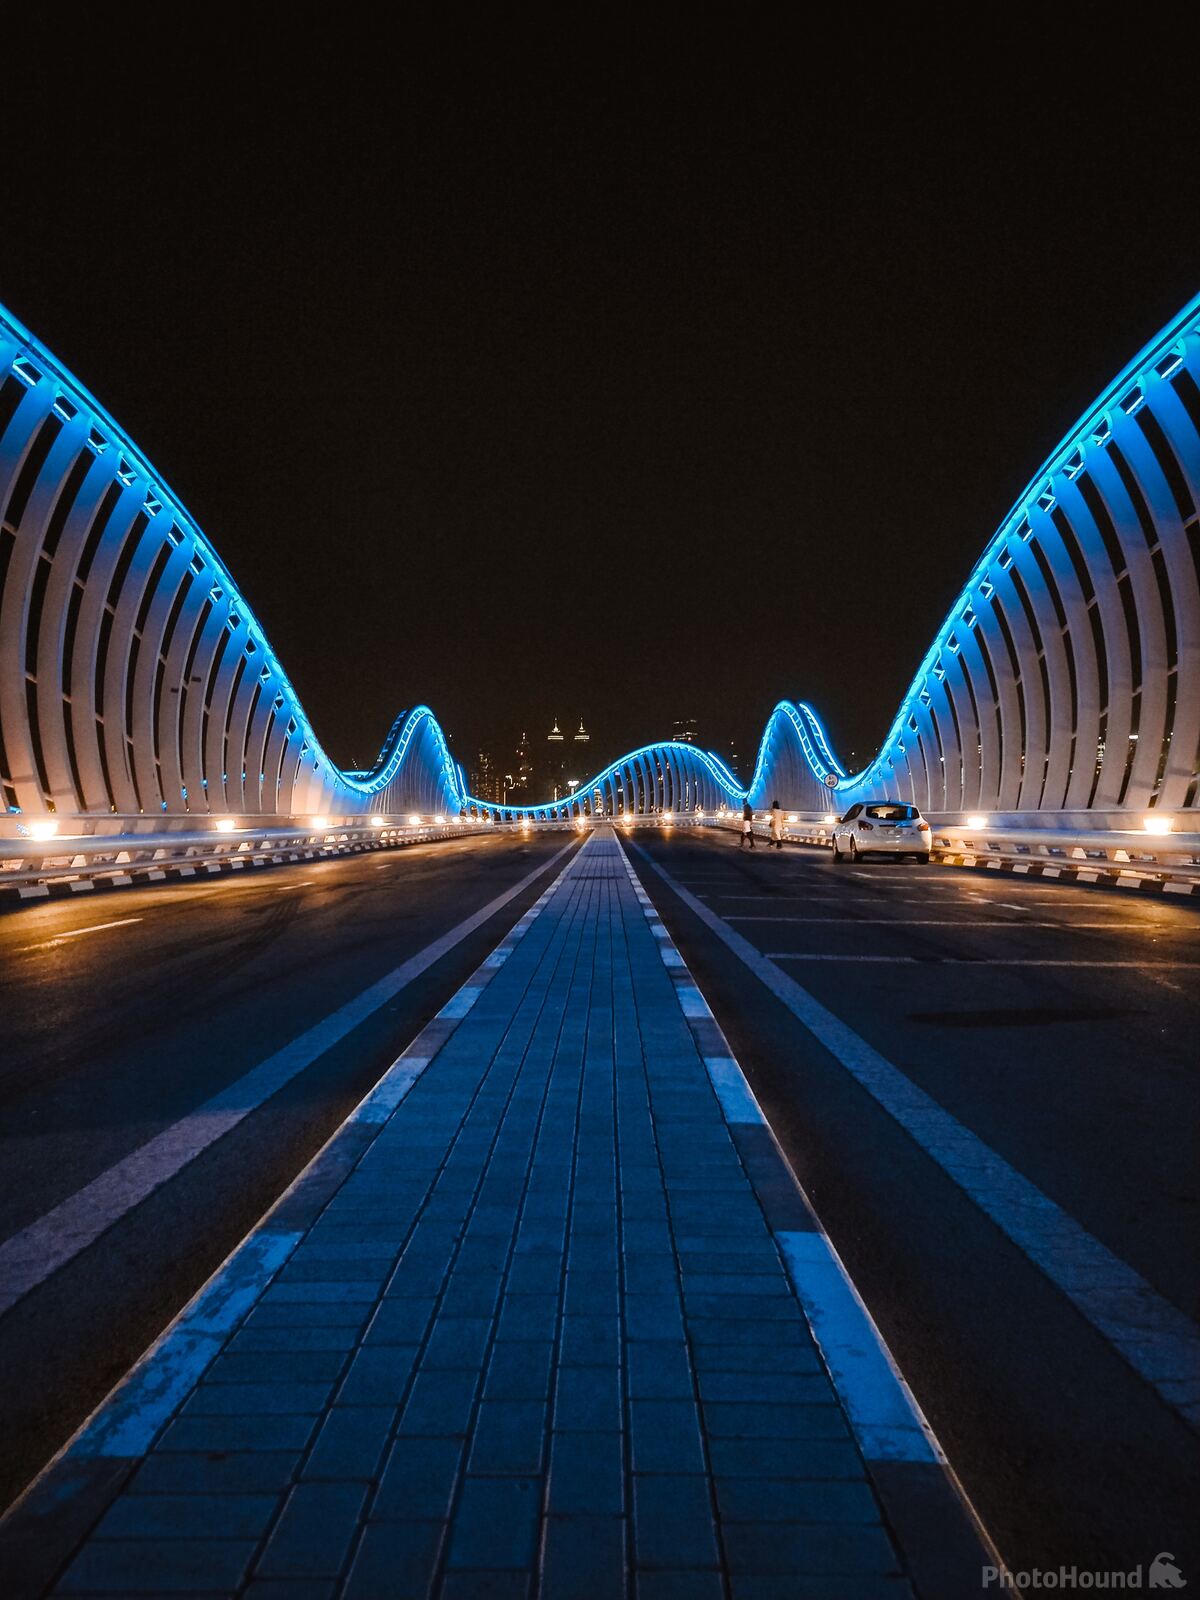 Image of Dubai Meydan Bridge by Team PhotoHound